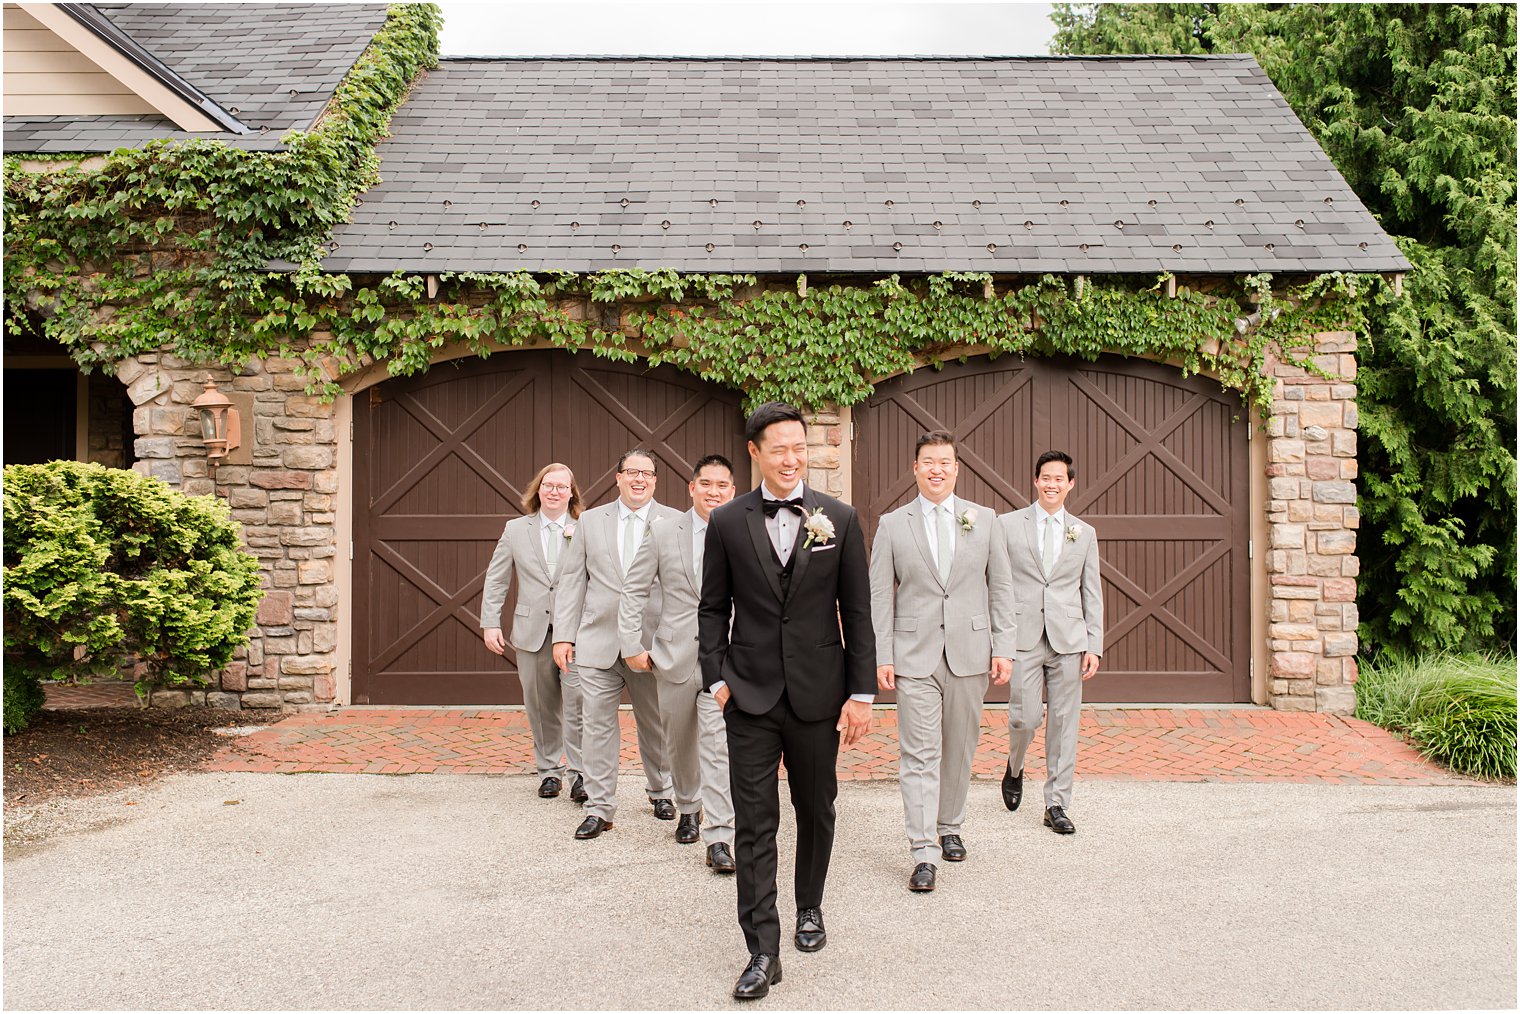 groom walks with five groomsmen in grey suits behind him